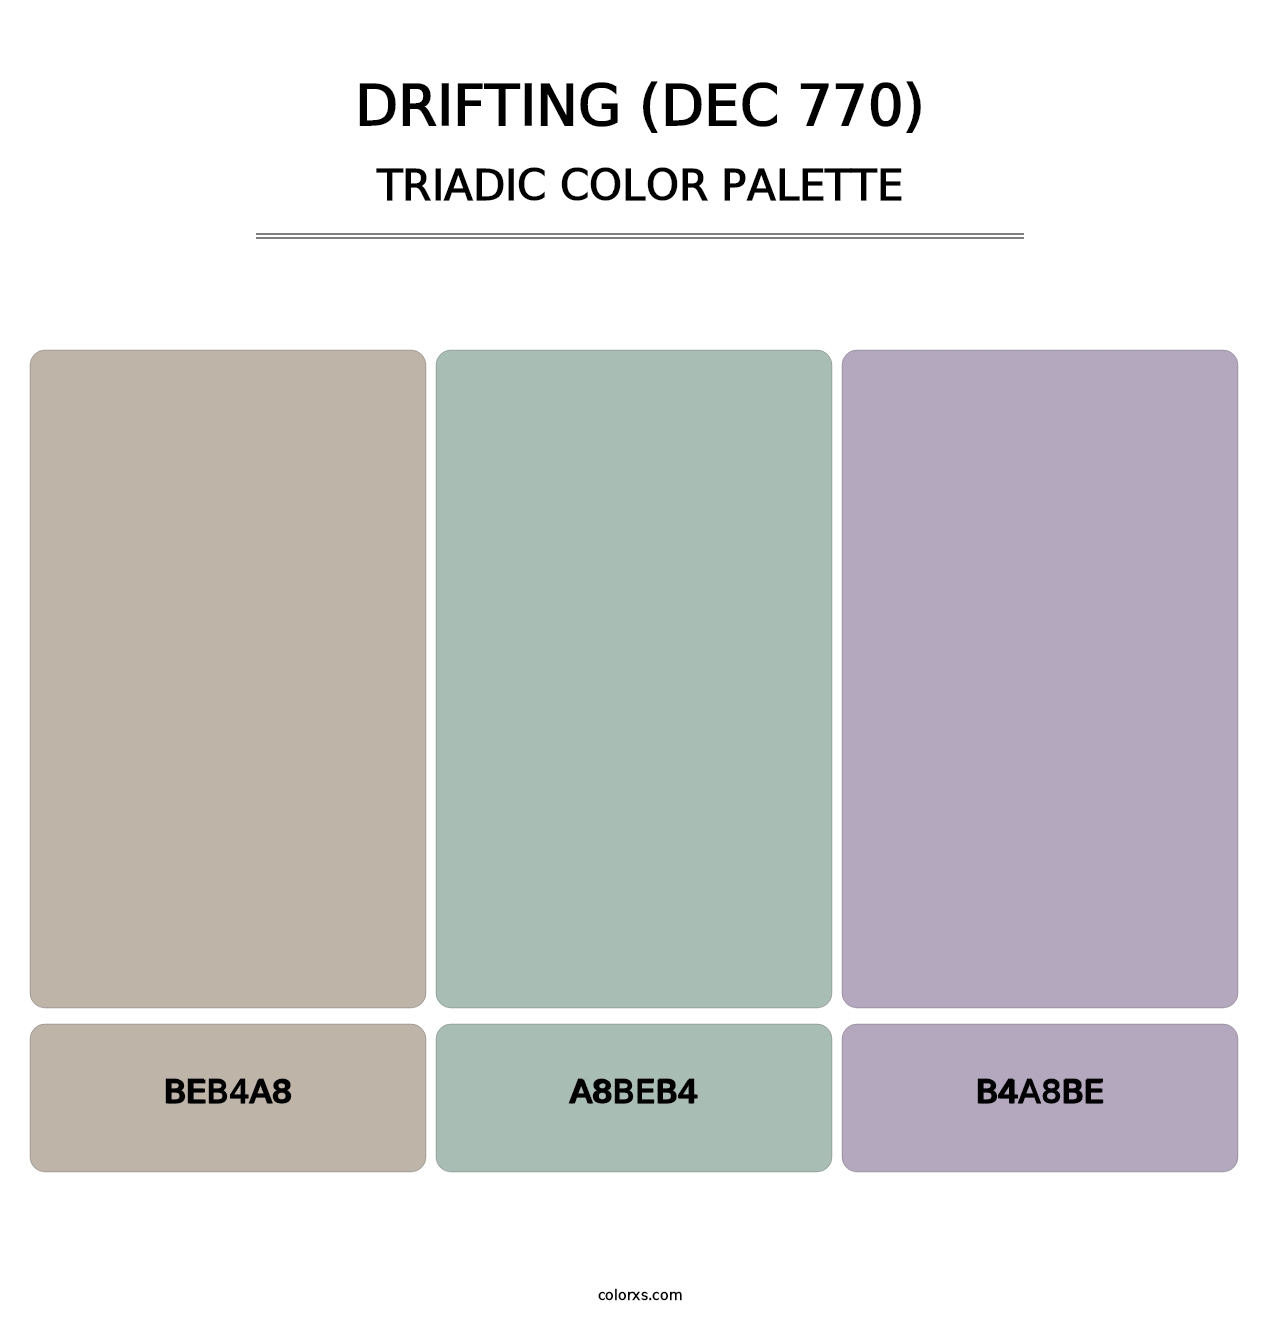 Drifting (DEC 770) - Triadic Color Palette